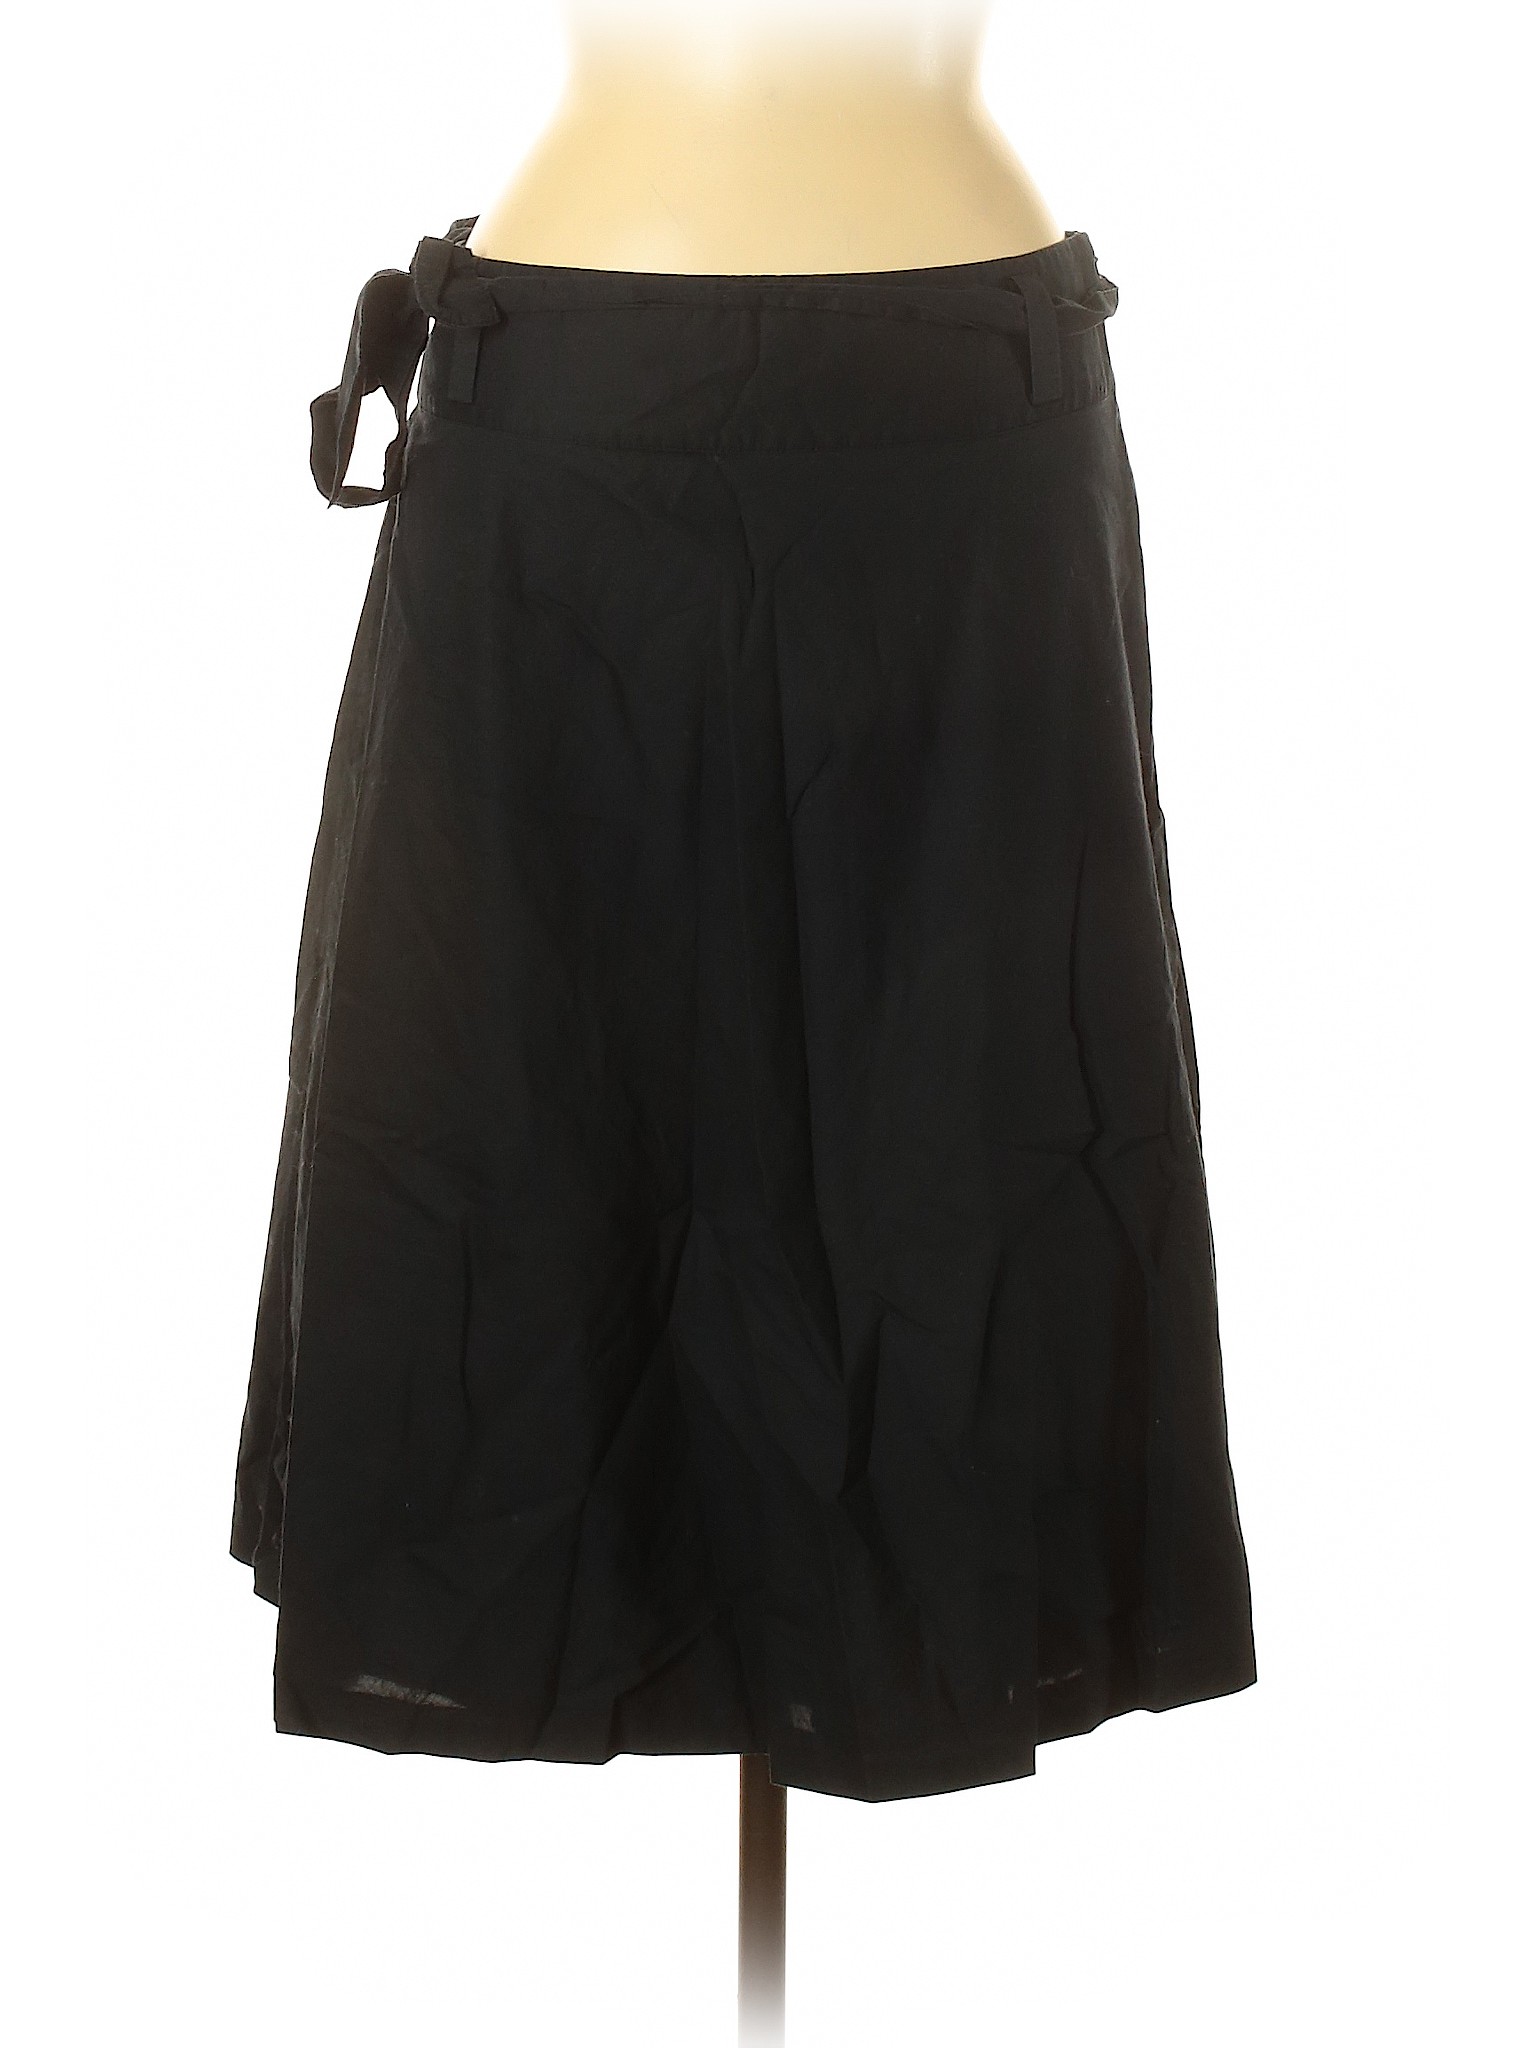 Lands' End Women Black Casual Skirt 6 | eBay